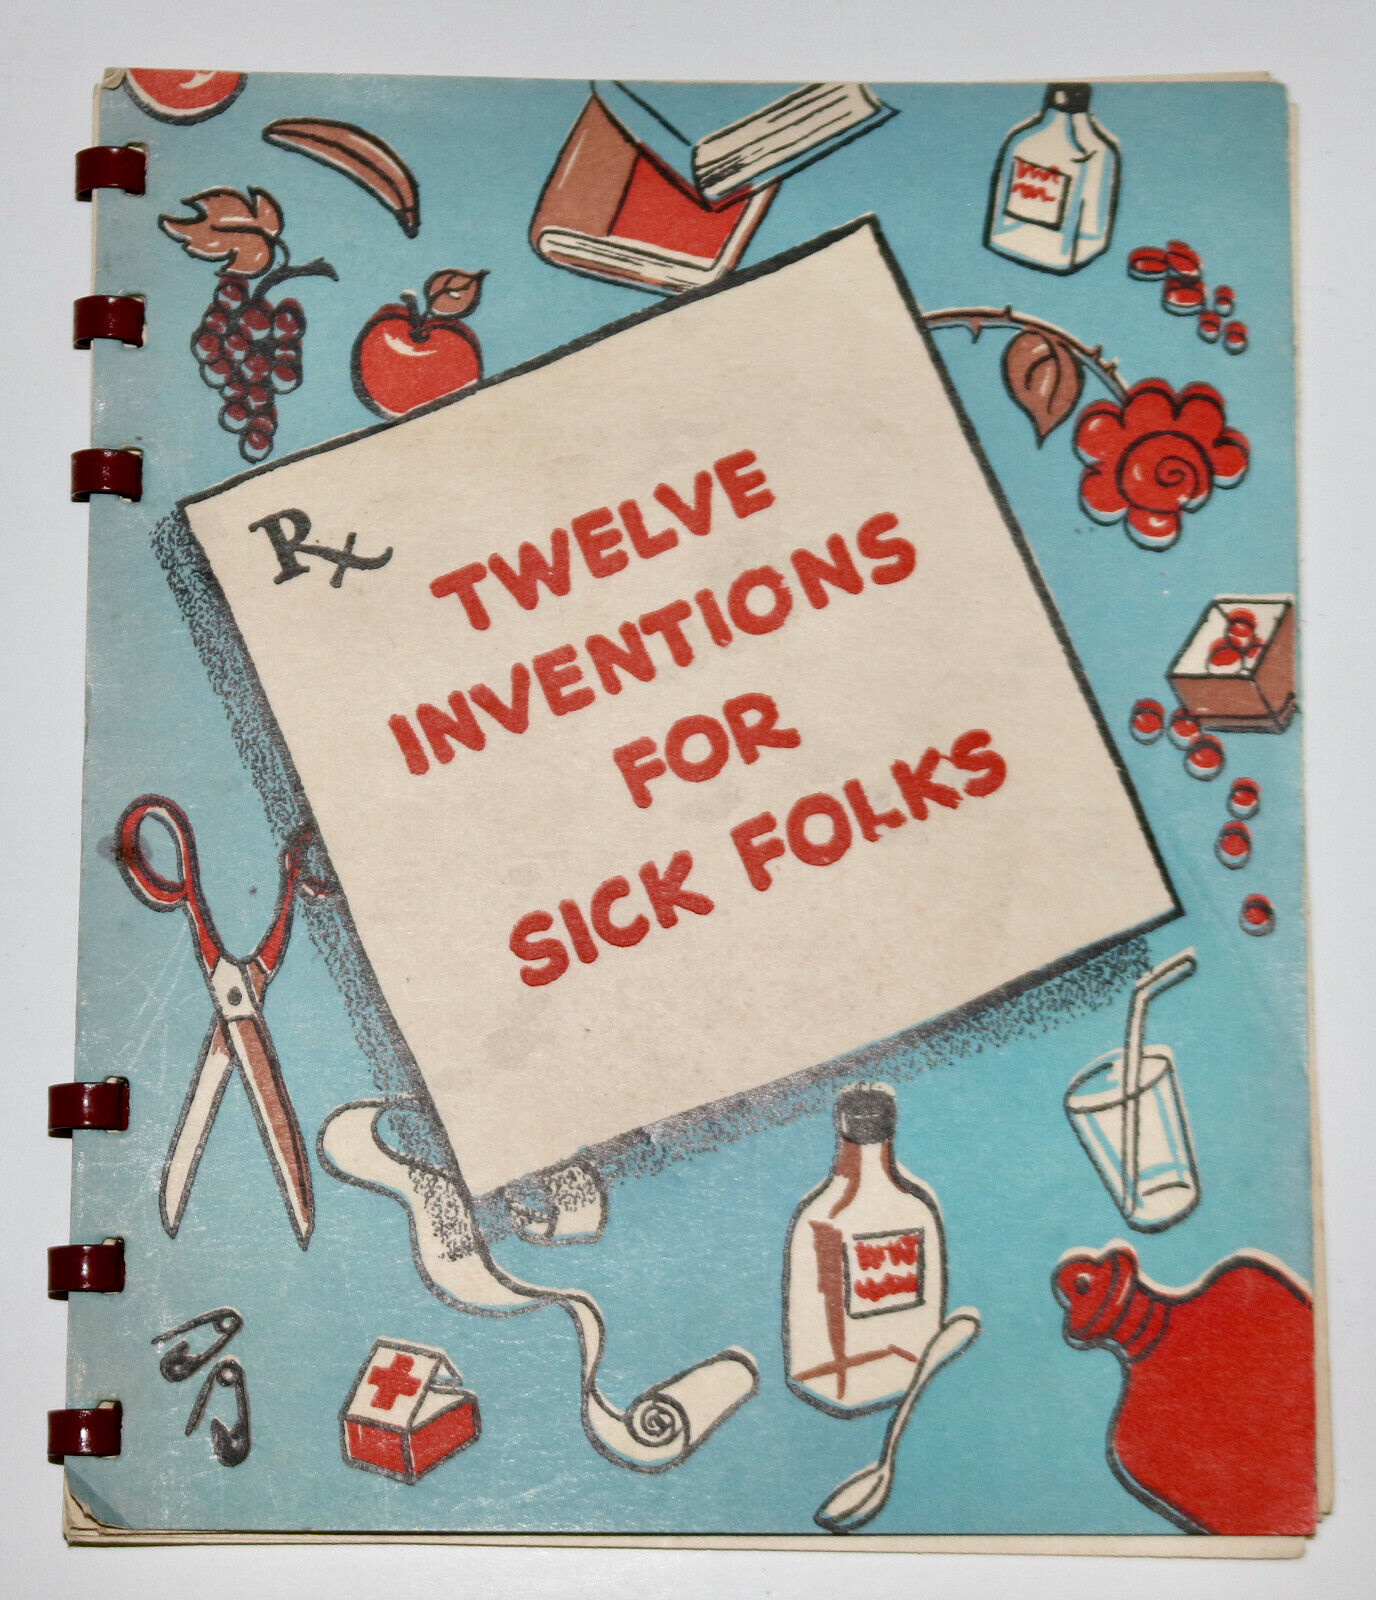 Hallmark vintage 1942 12 inventions for sick folks booklet Get Well card